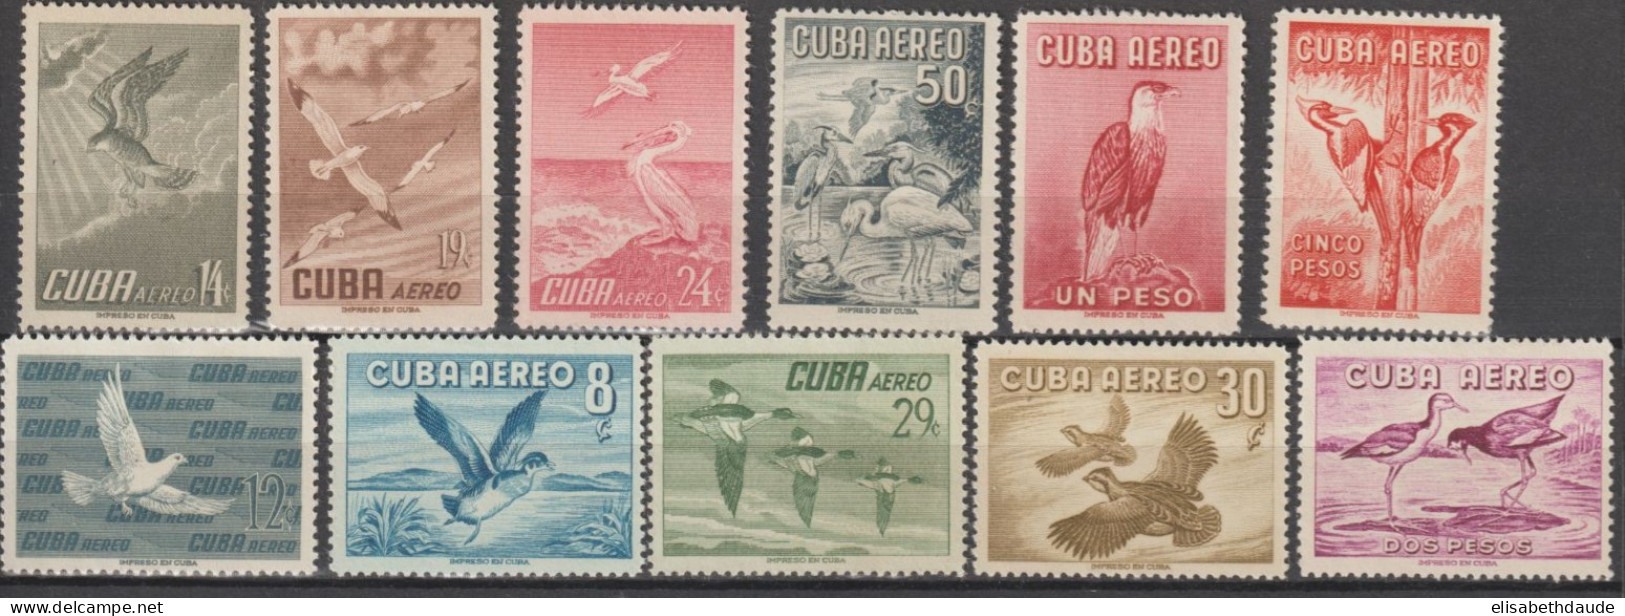 C UBA - 1957 - POSTE AERIENNE - SERIE COMPLETE OISEAUX / BIRDS YVERT N°135/145 ** / * MNH / MLH - COTE YVERT = 90 EUR - Aéreo